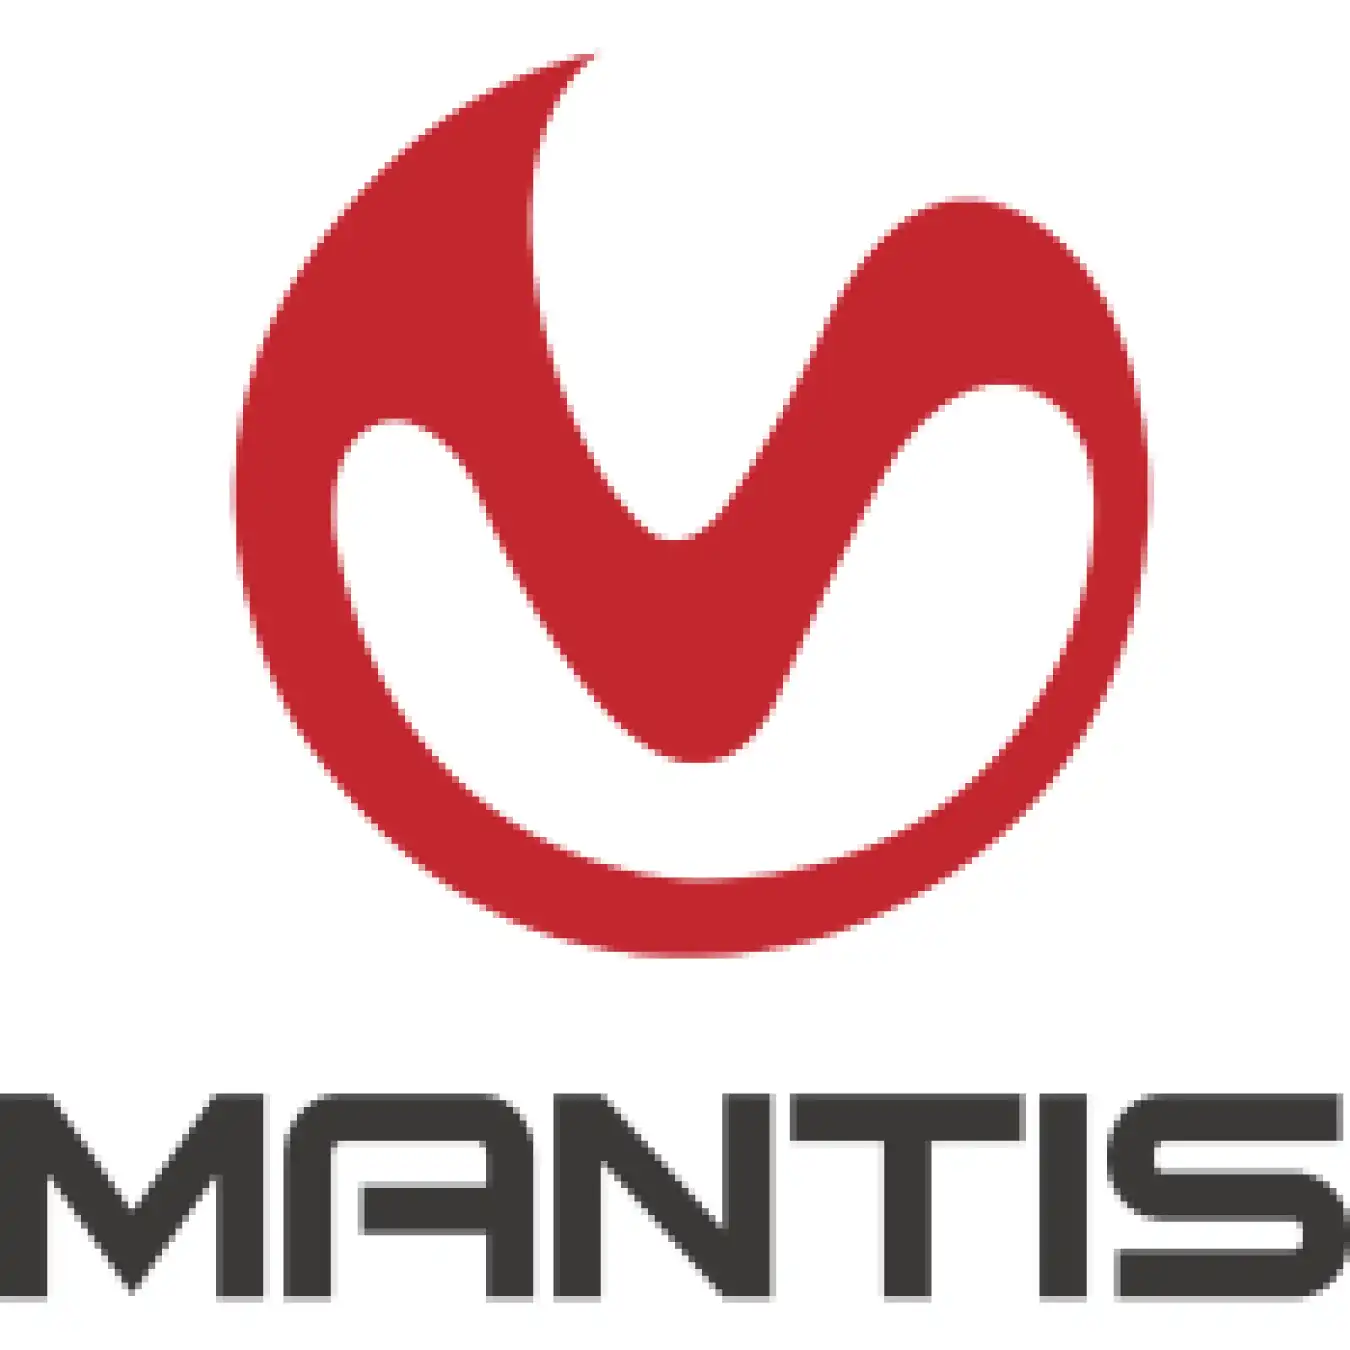 MantisX